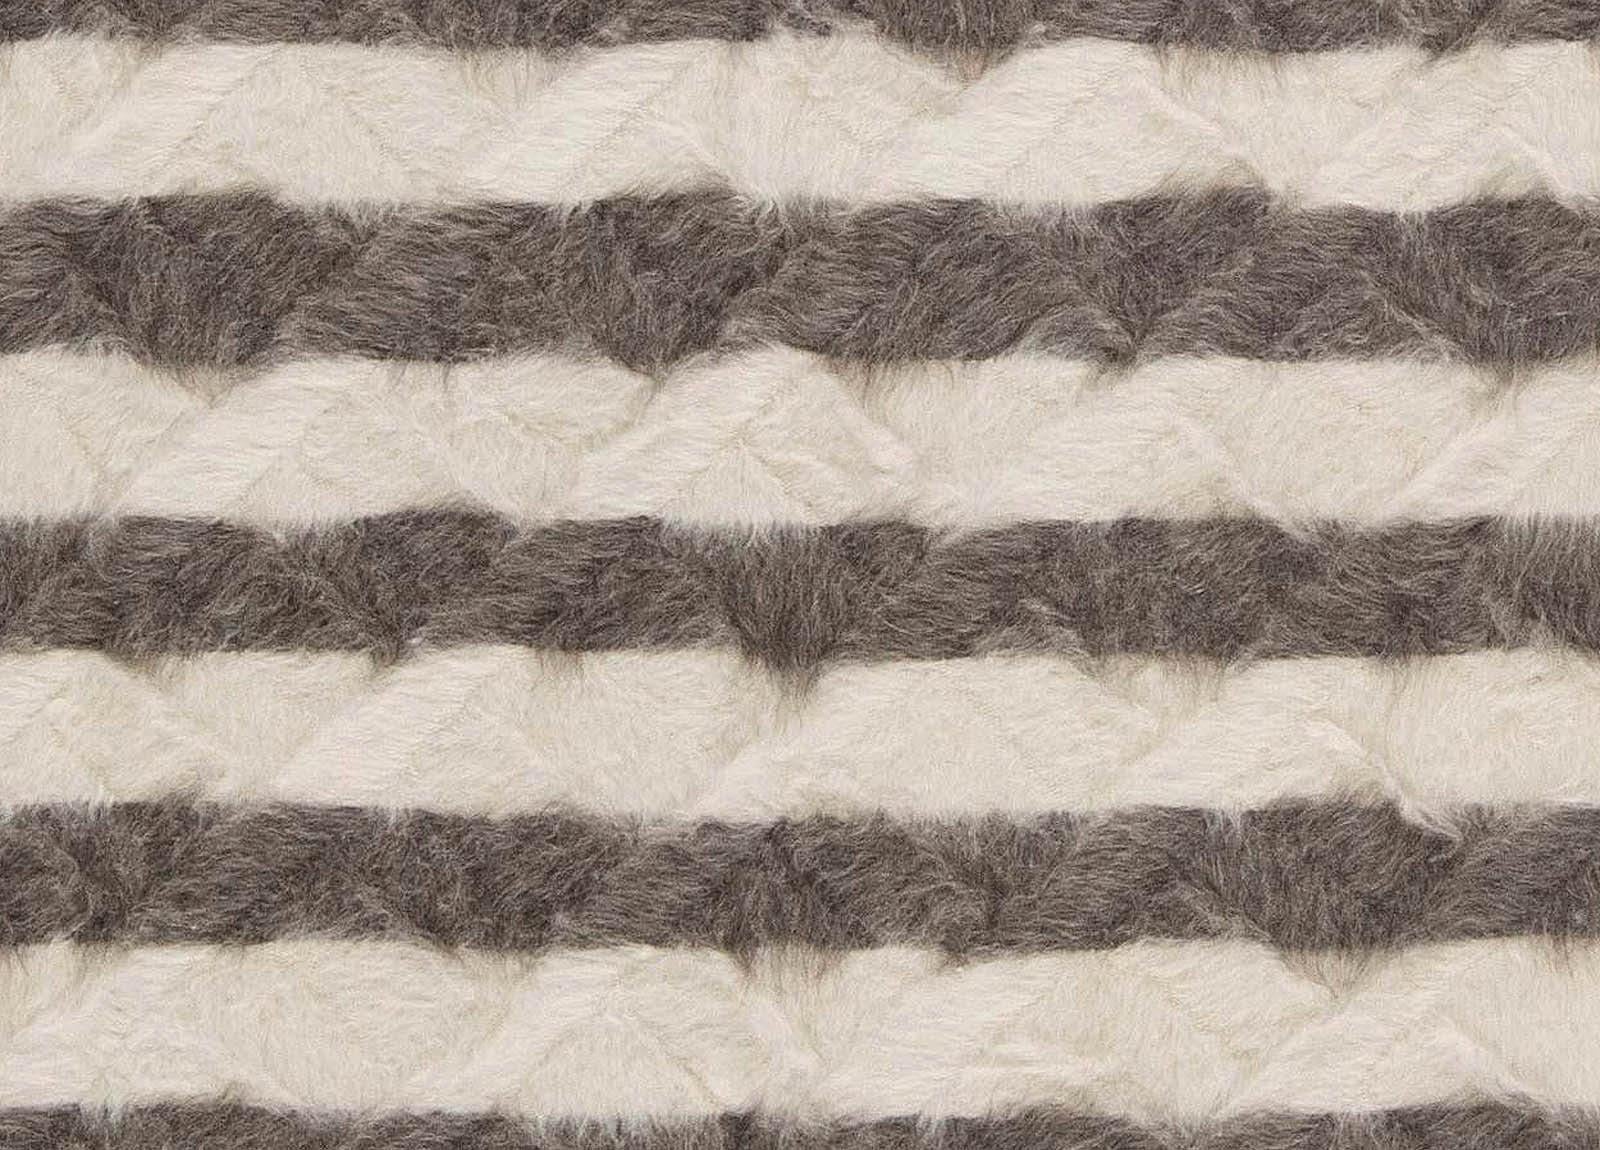 Taurus Collection modern striped goat hair rug by Doris Leslie Blau
Size: 4'0